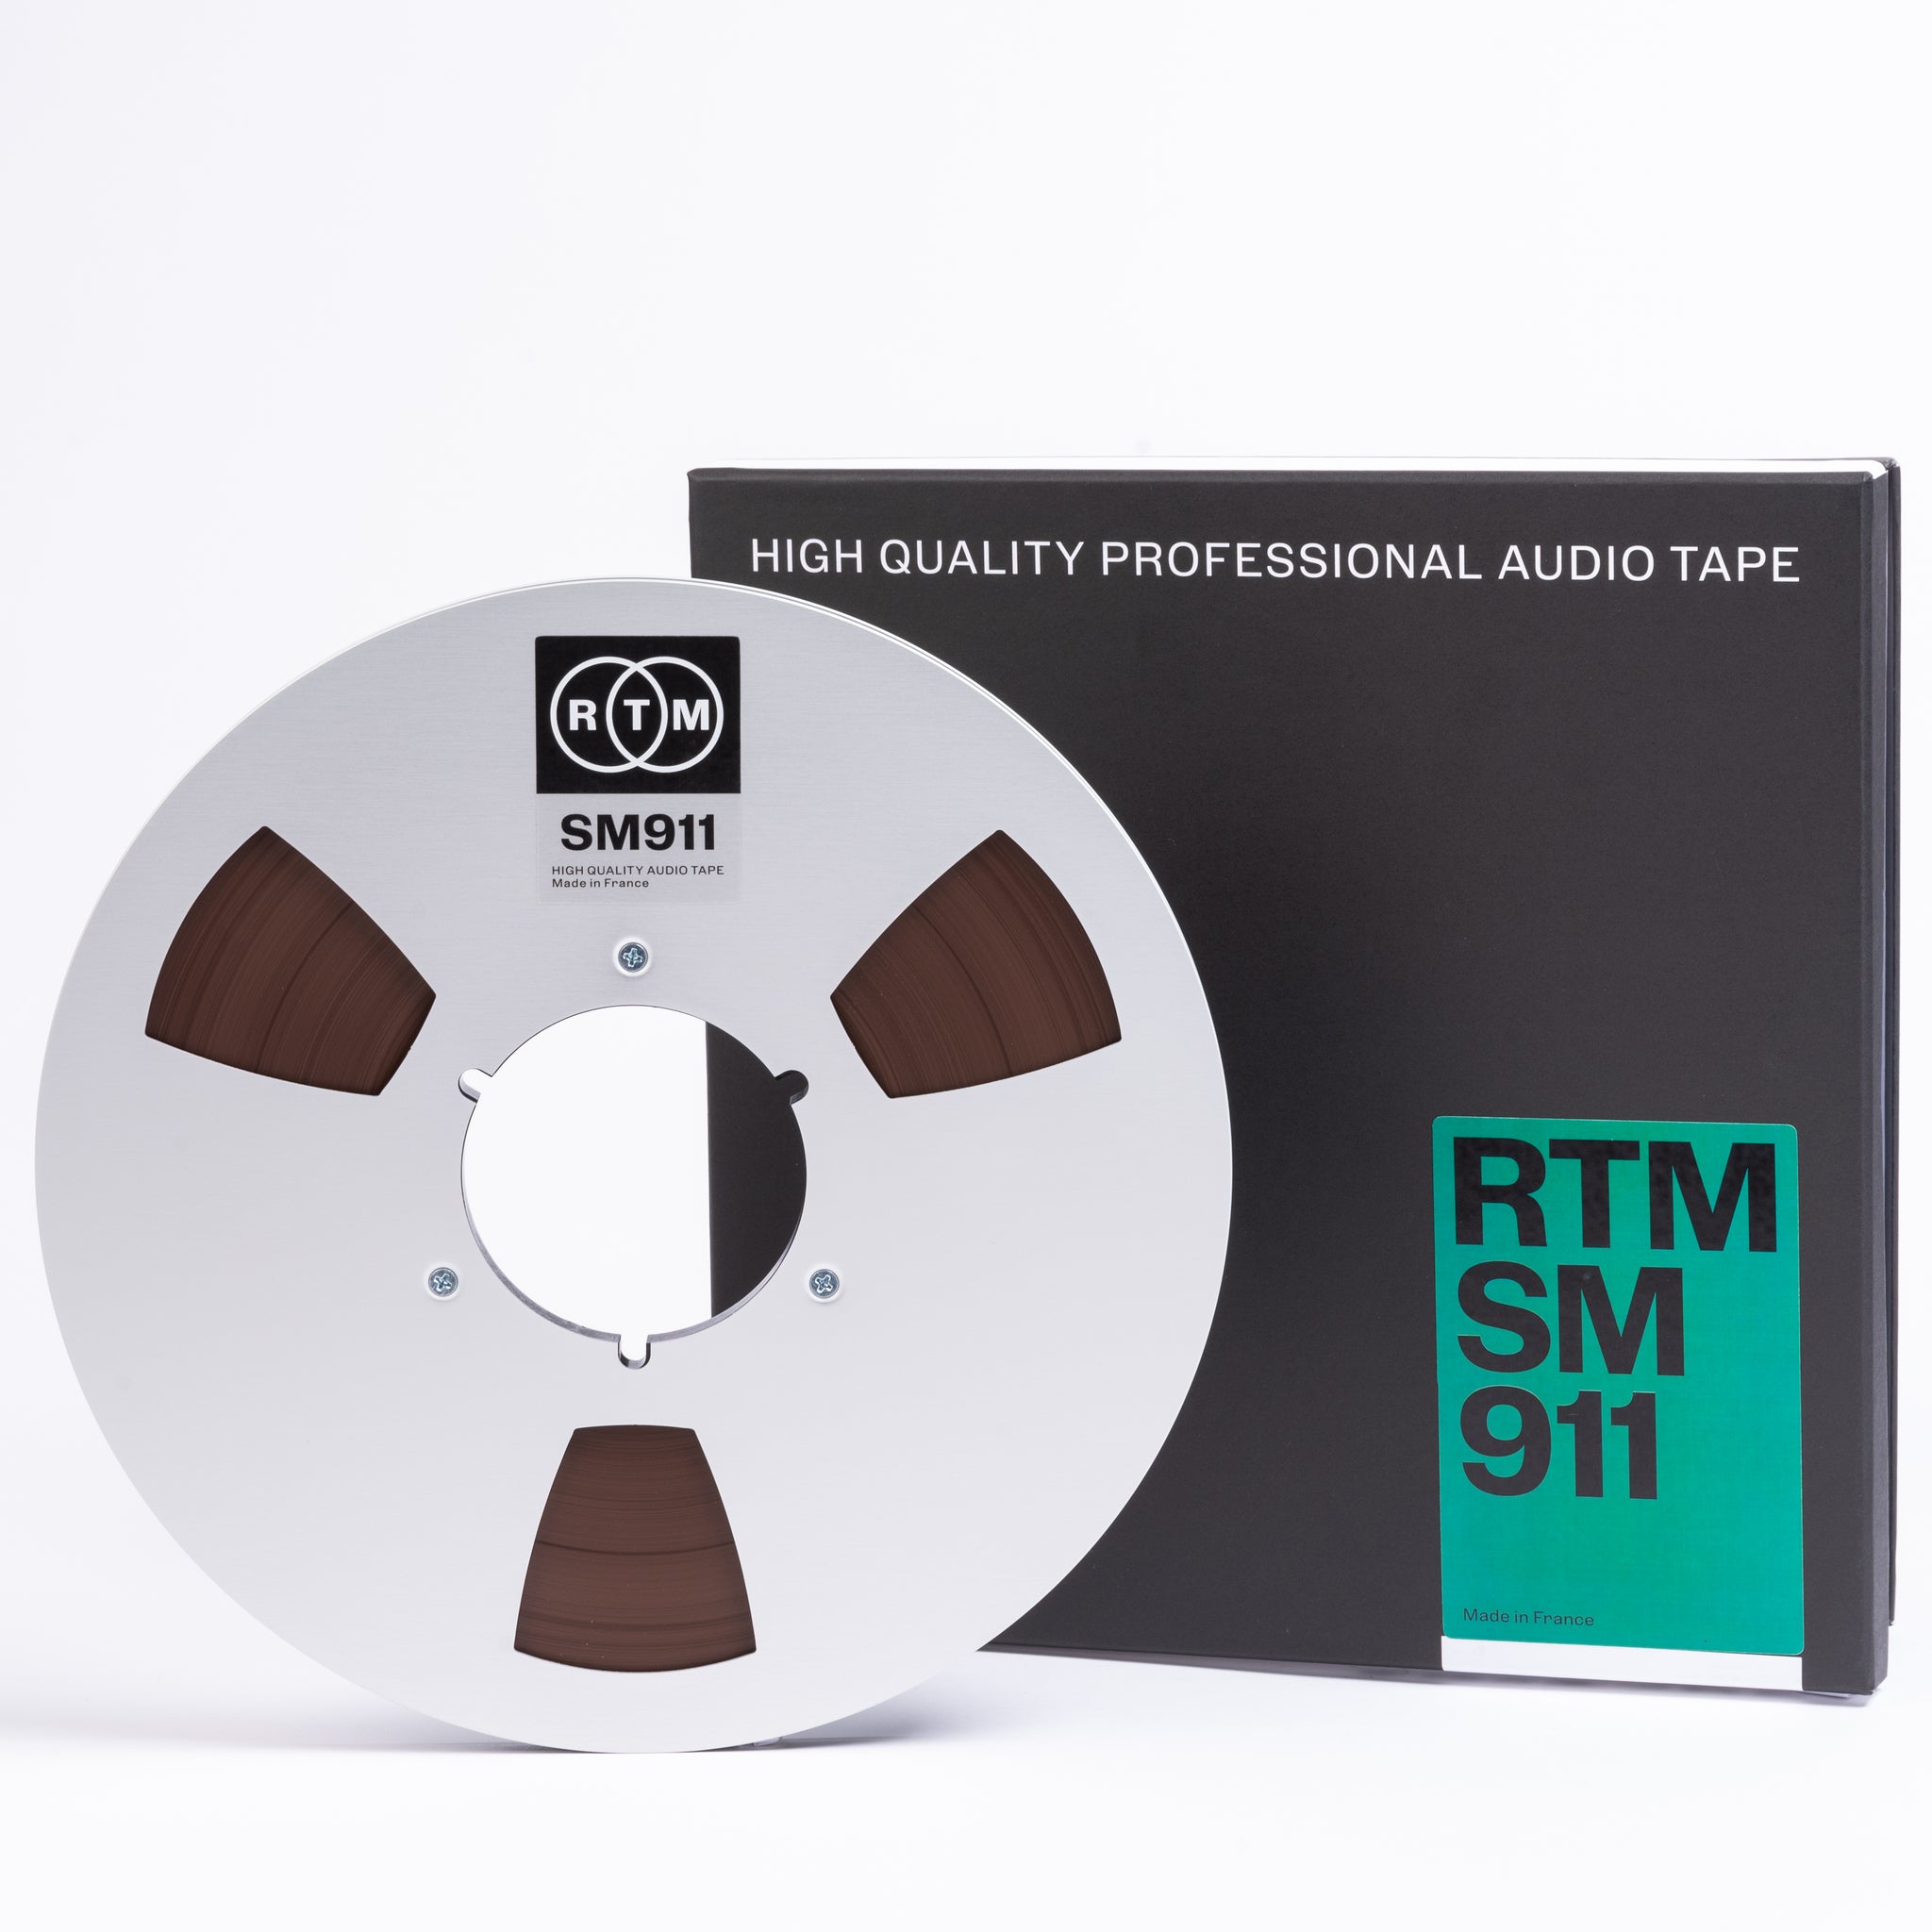 1/4" SM911 Tape on 10.5 inch metal reel in cardboard box